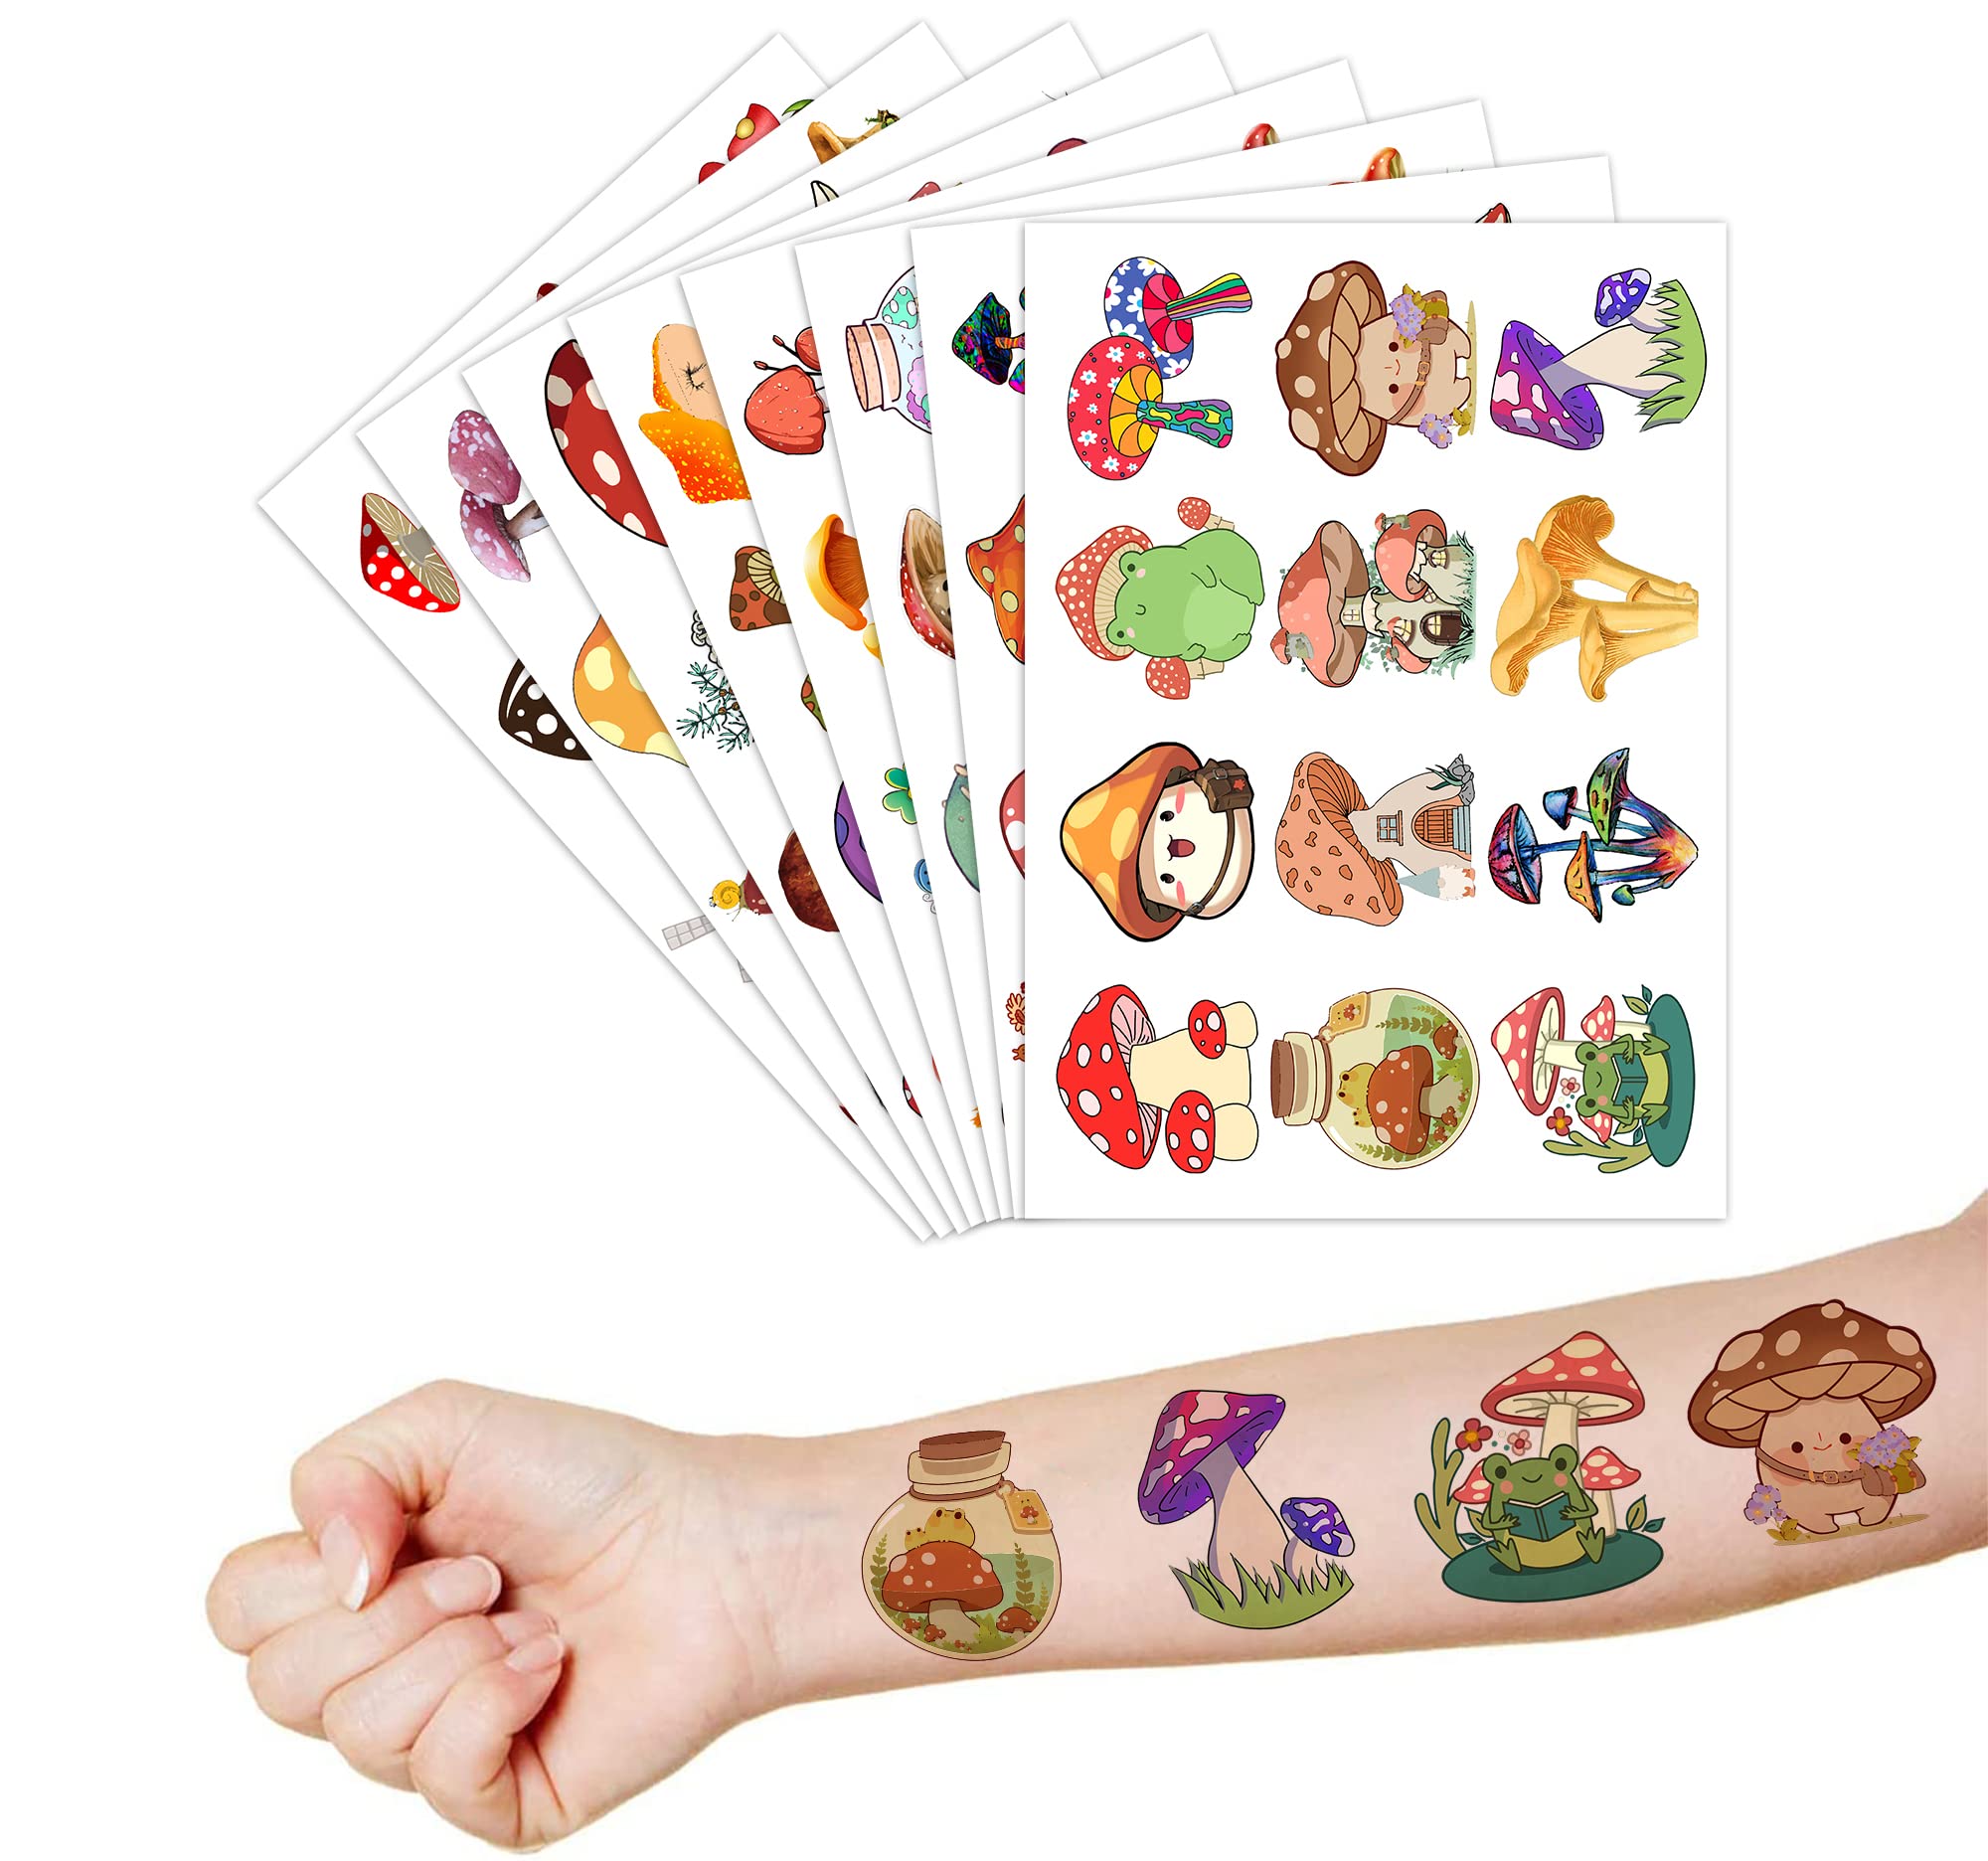 8 Sheet (96Pcs) Mushroom Temporary Tattoos Sticker for Kids, Mushroom Birthday Party Decorations Supplies Favors Super Cute Face Tattoos Sticker Gifts Ideas for Boys Girls Baby Shower Prizes Rewards